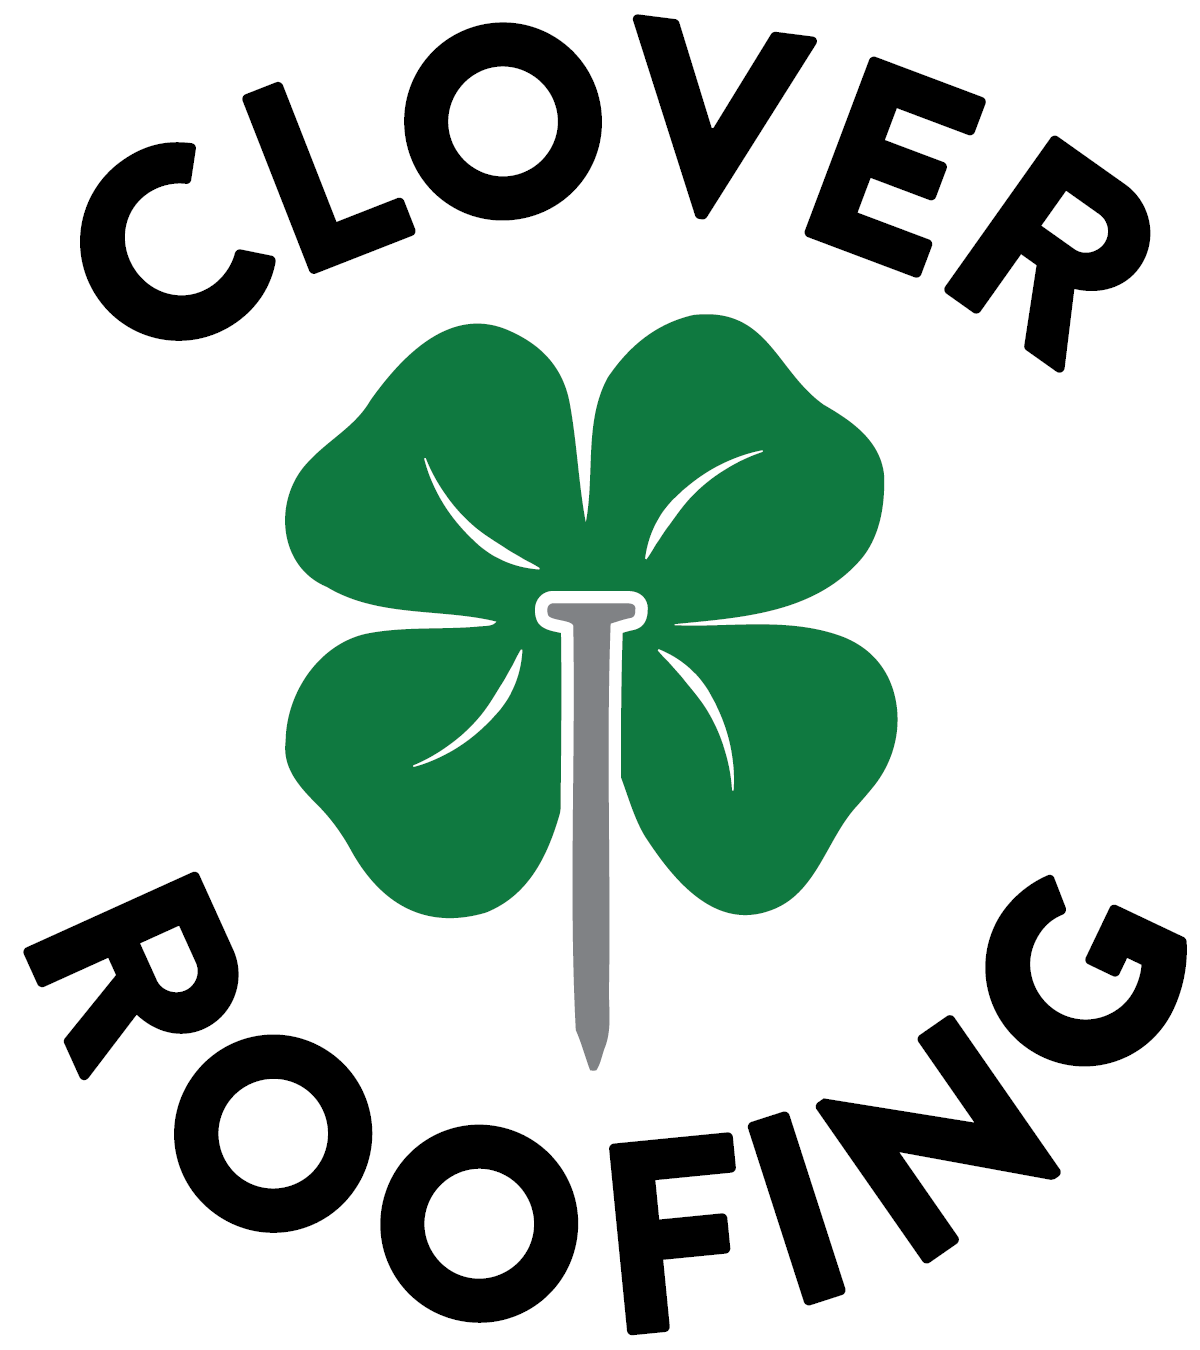 Clover Roofing Logo